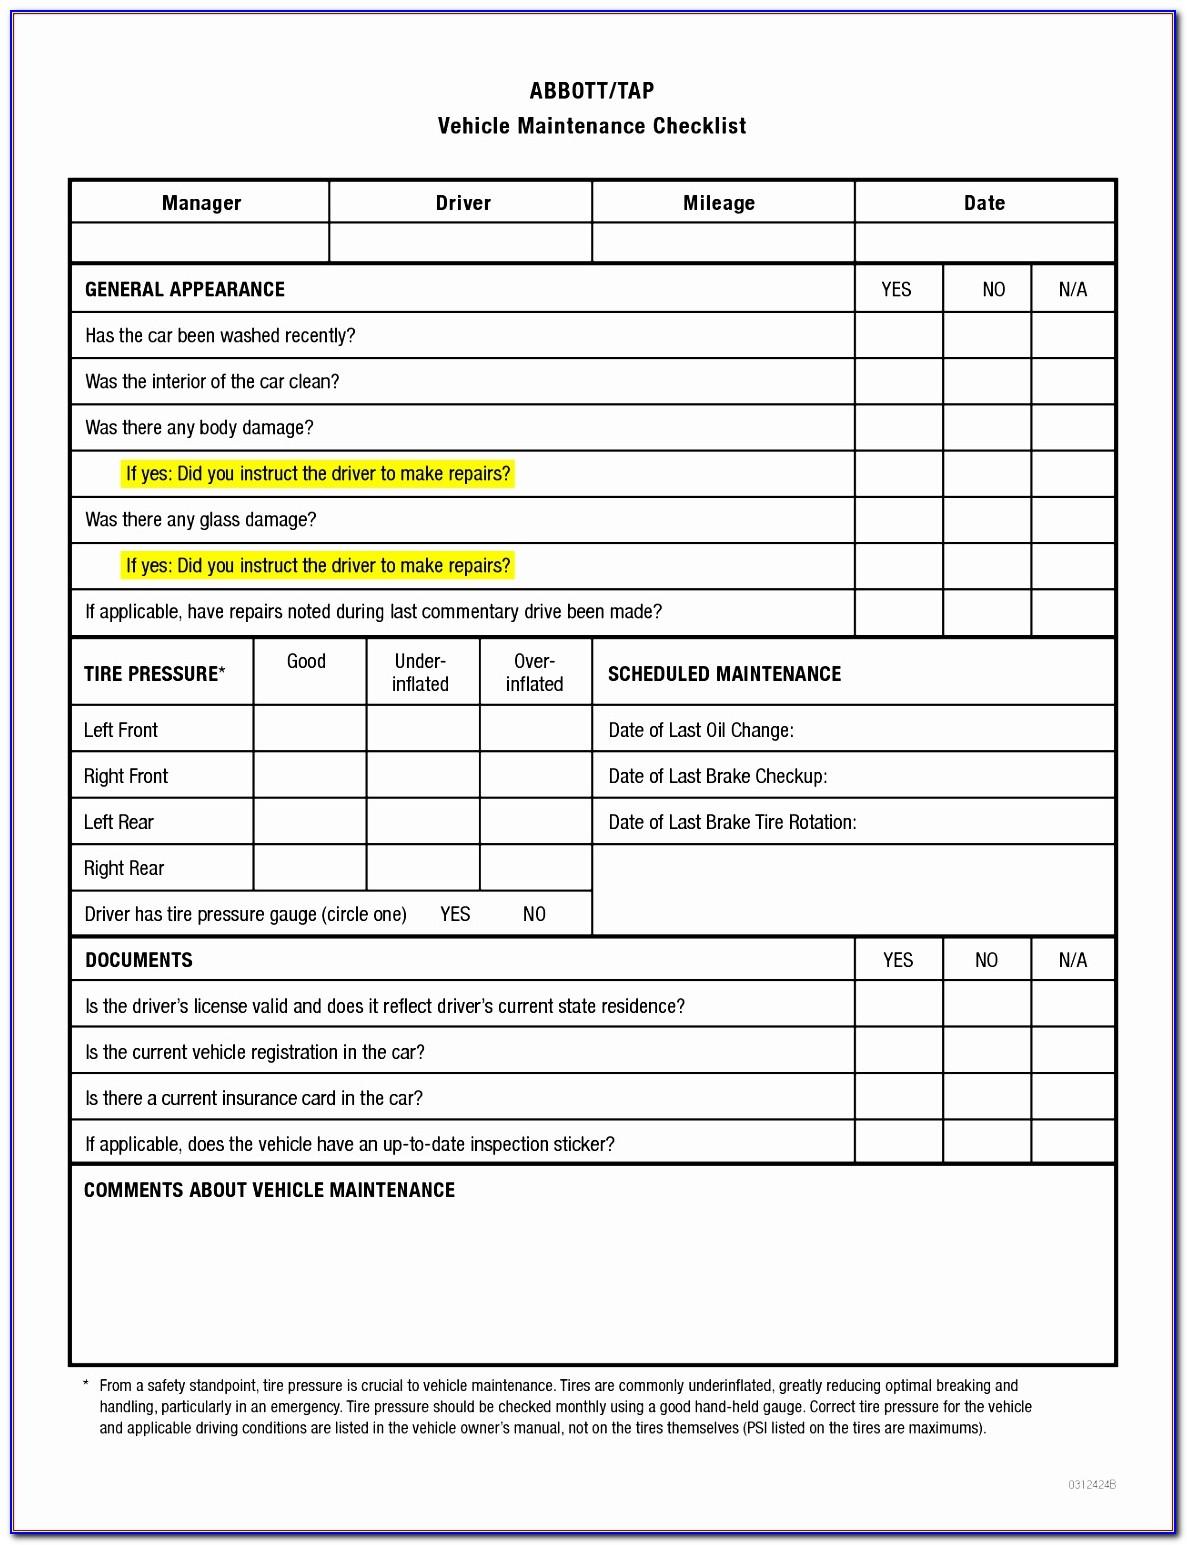 Vehicle Maintenance Checklist Template Excel